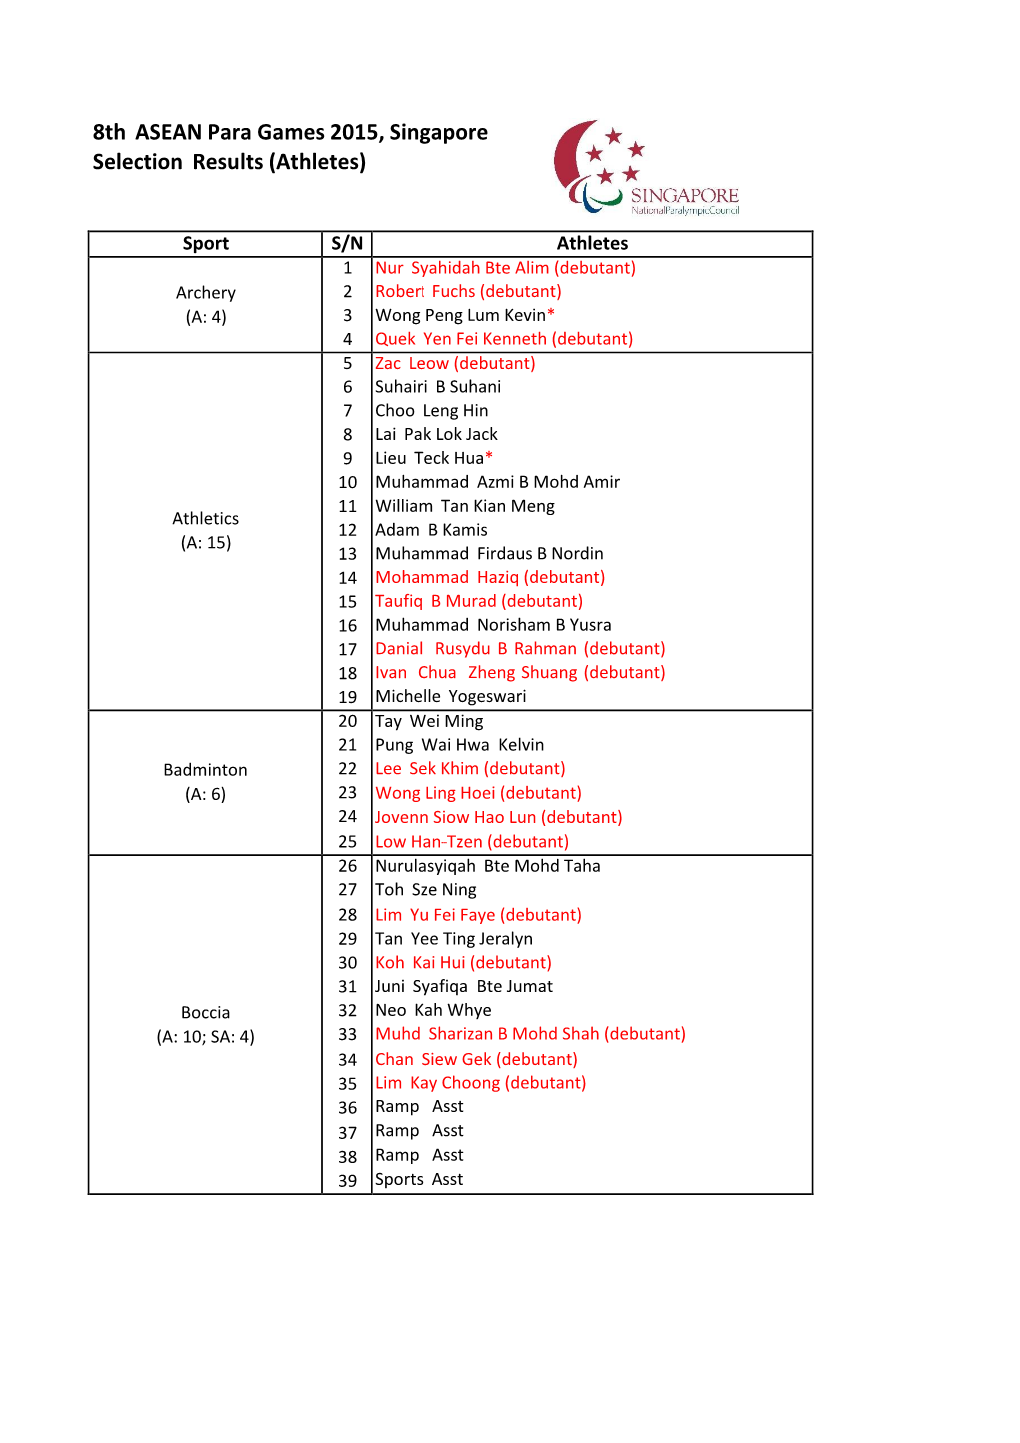 8Th ASEAN Para Games 2015, Singapore Selection Results (Athletes)